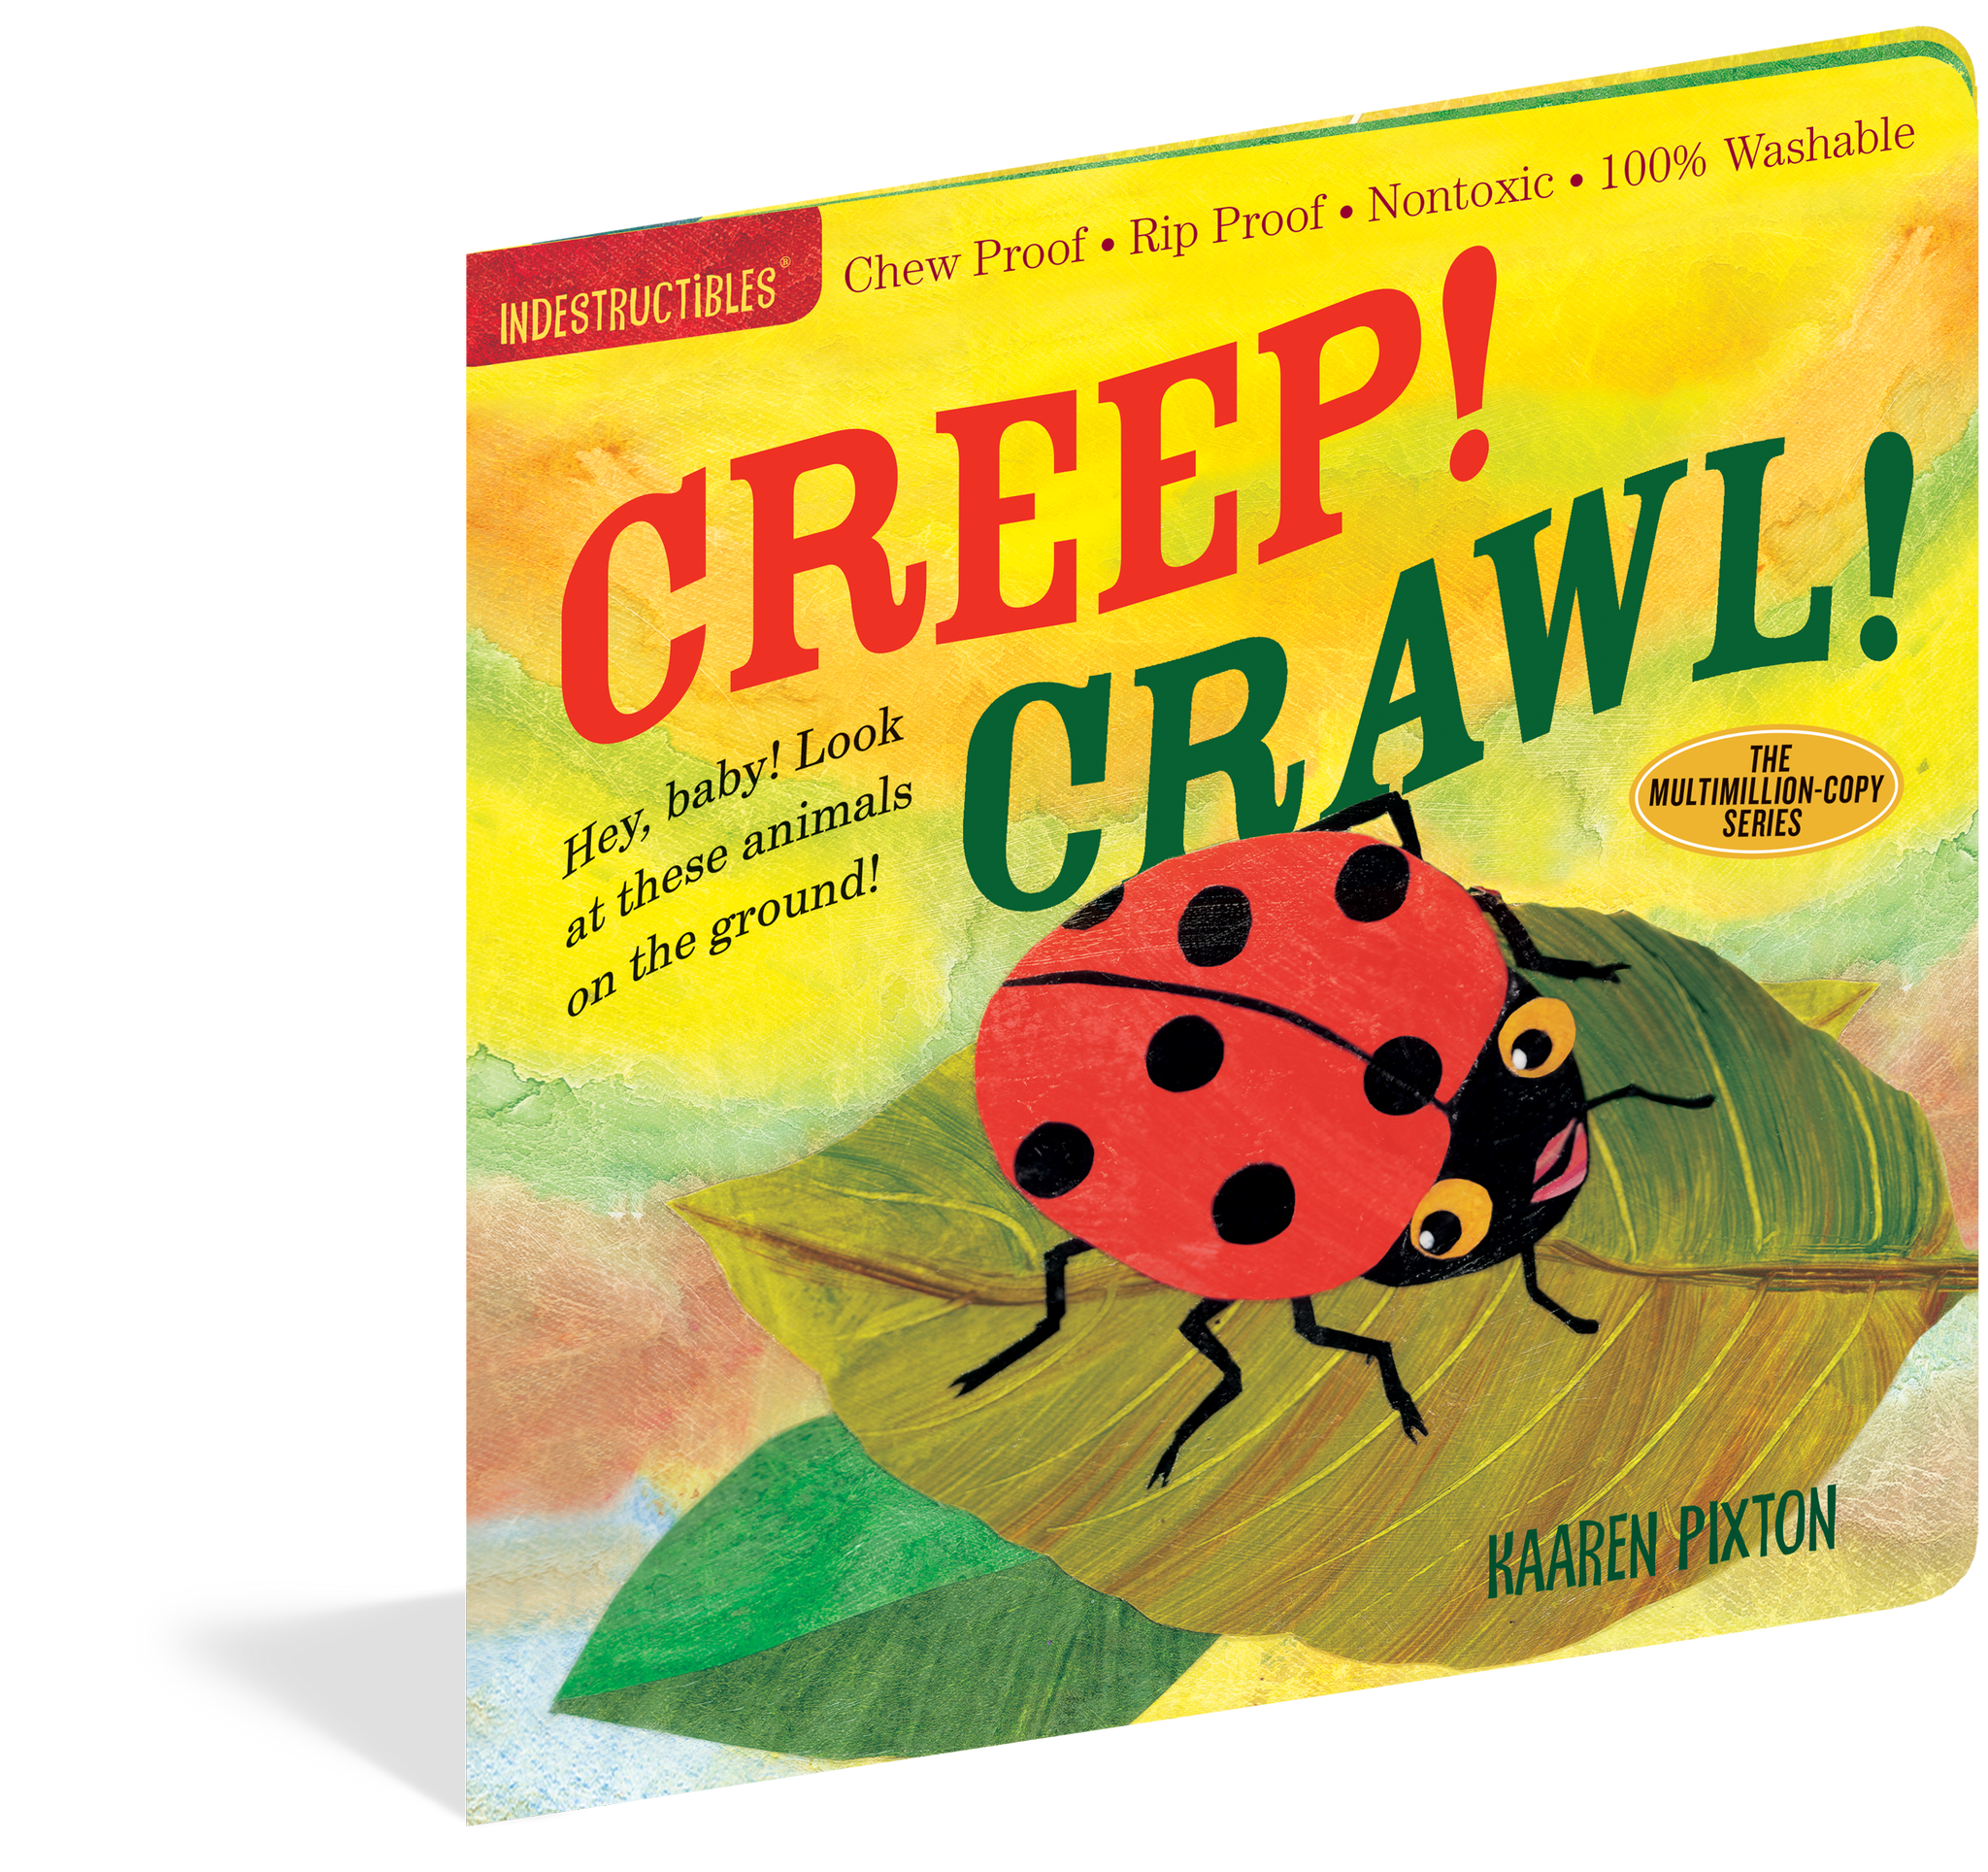 Creep! Crawl! - Indestructible Book